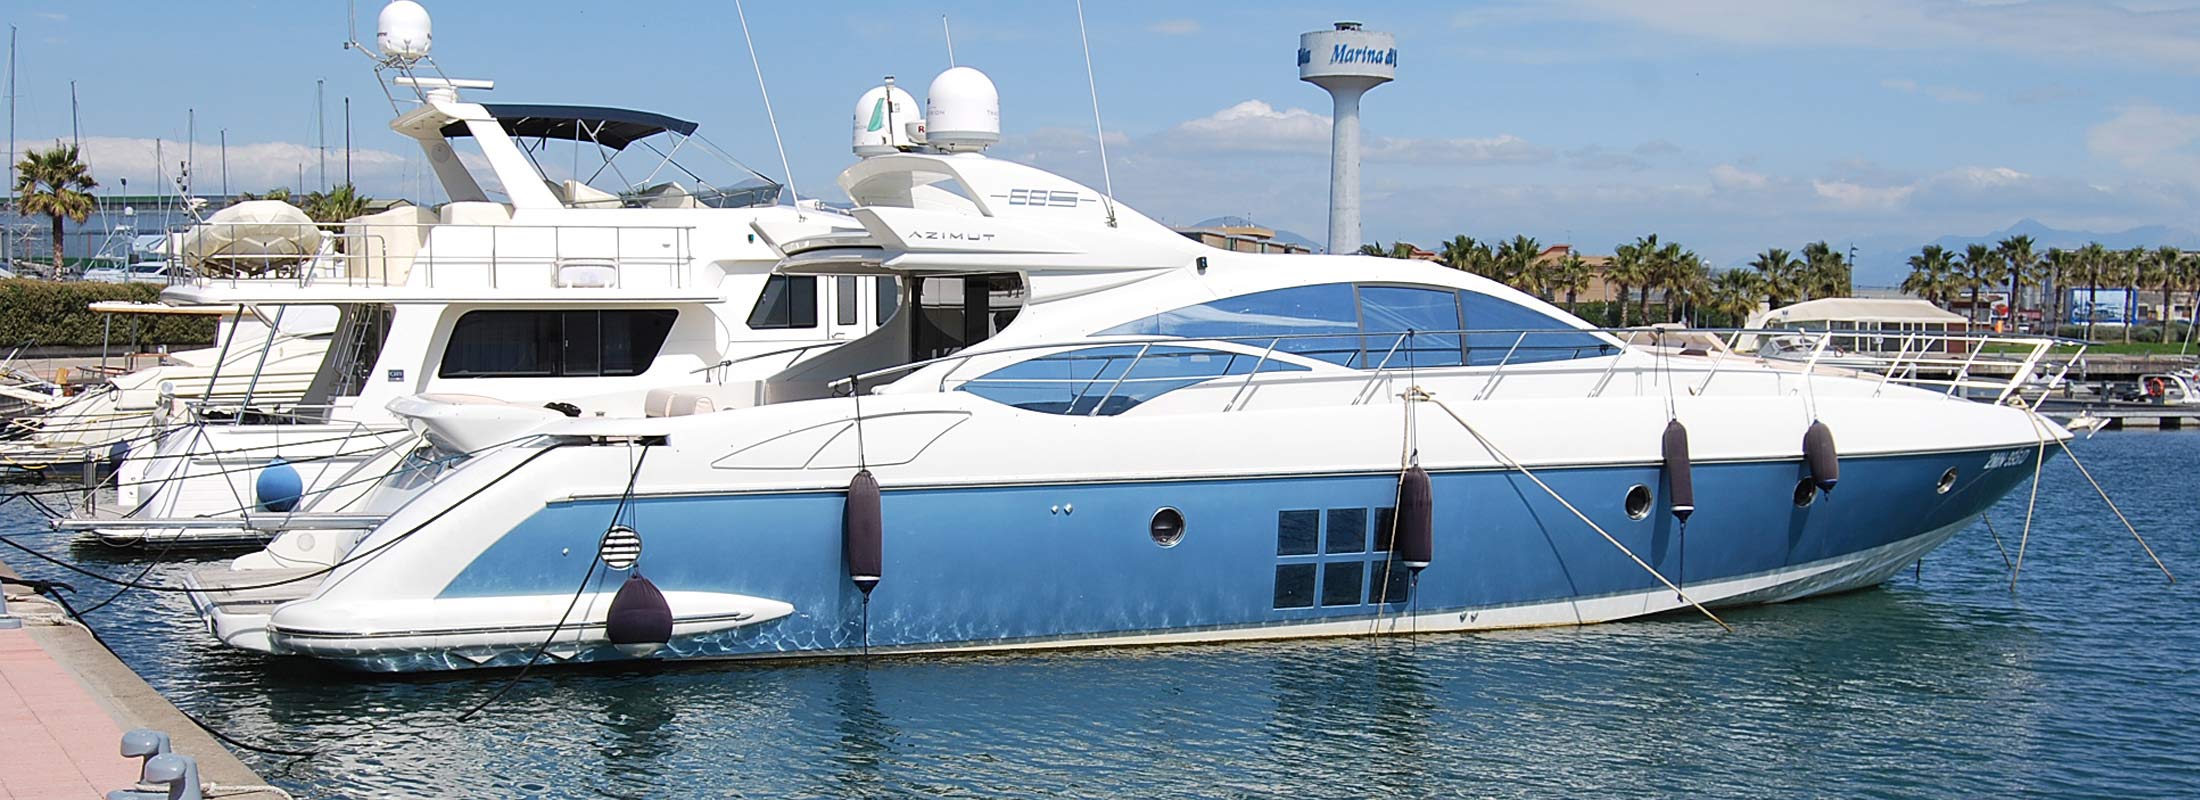 Sabea Motor Yacht for Charter Mediterranean slider 1